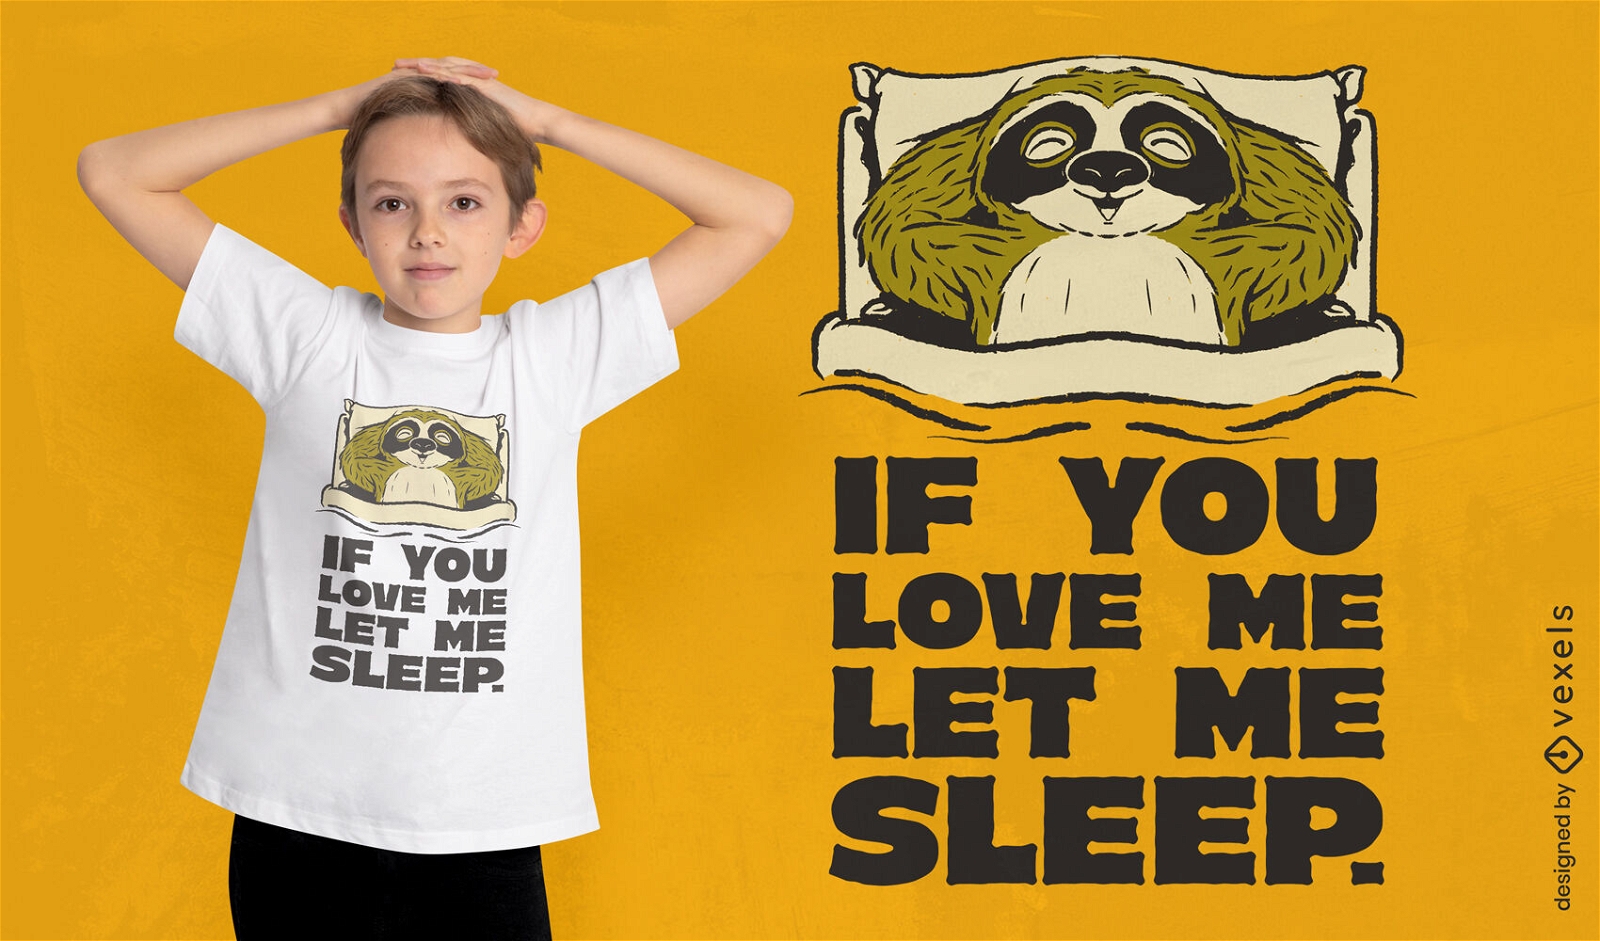 If you love me let me sleep t-shirt design